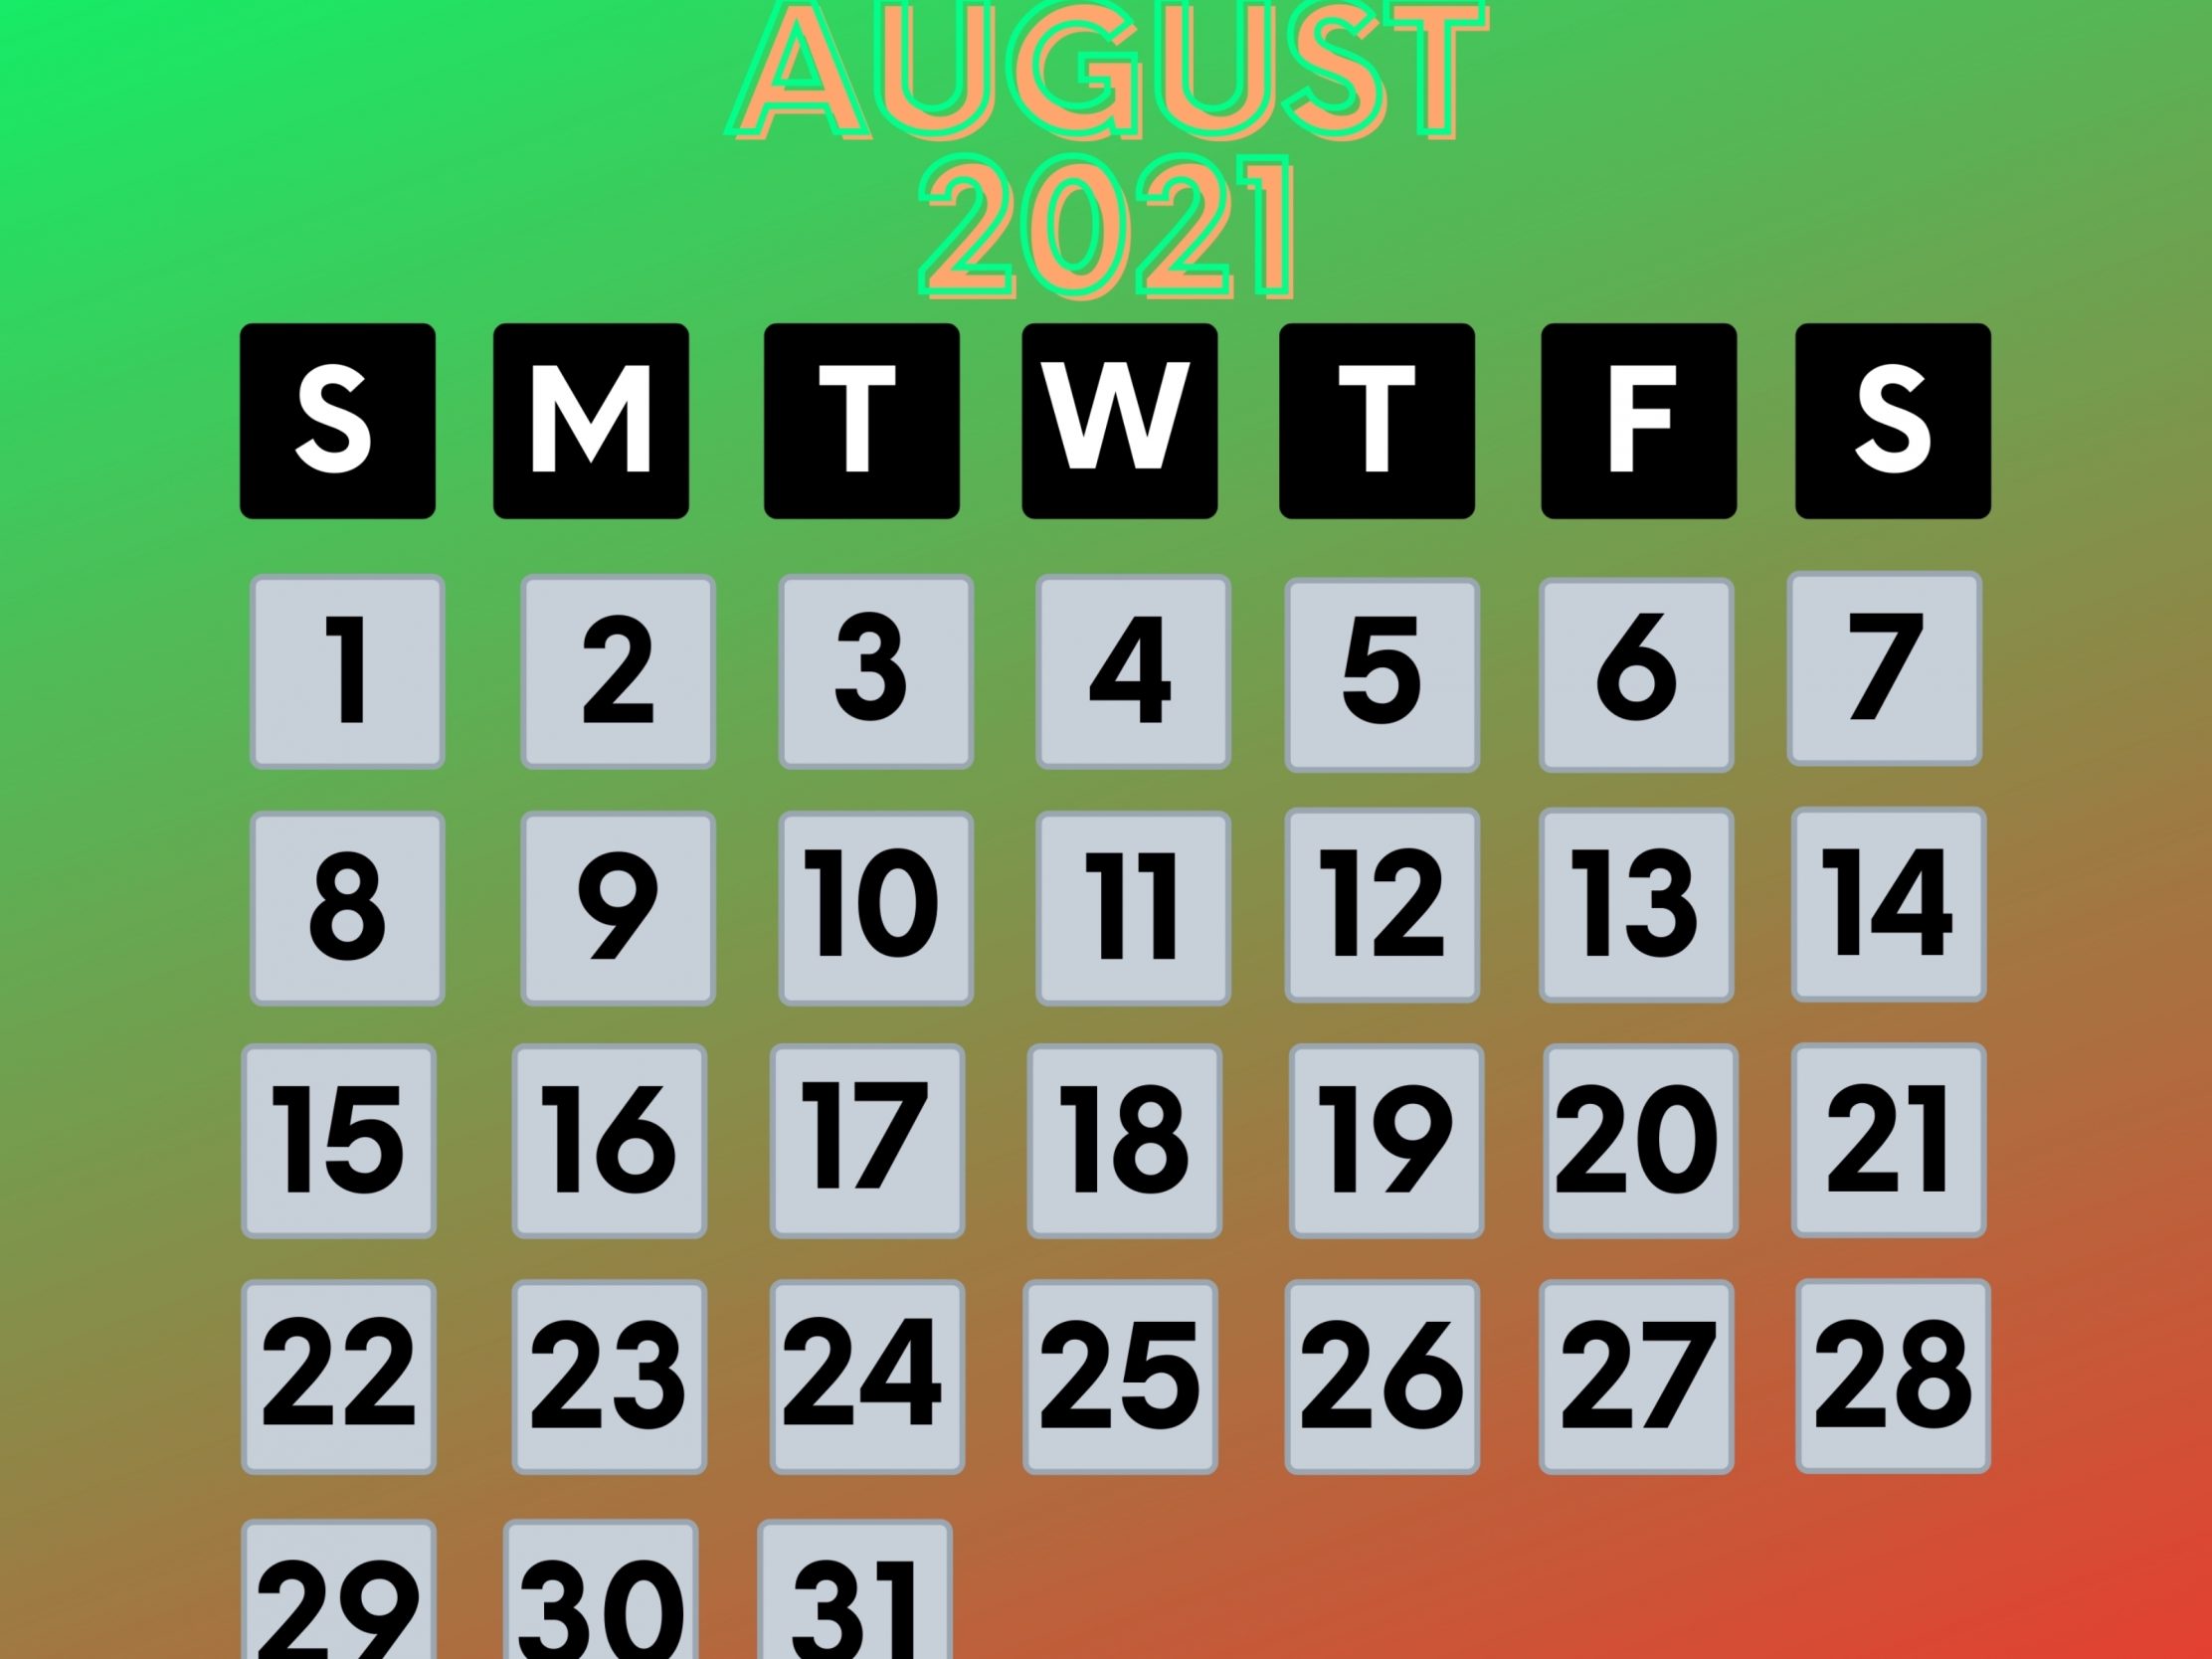 2224x1668 iPad Pro wallpapers August 2021 Calendar iPad Wallpaper 2224x1668 pixels resolution